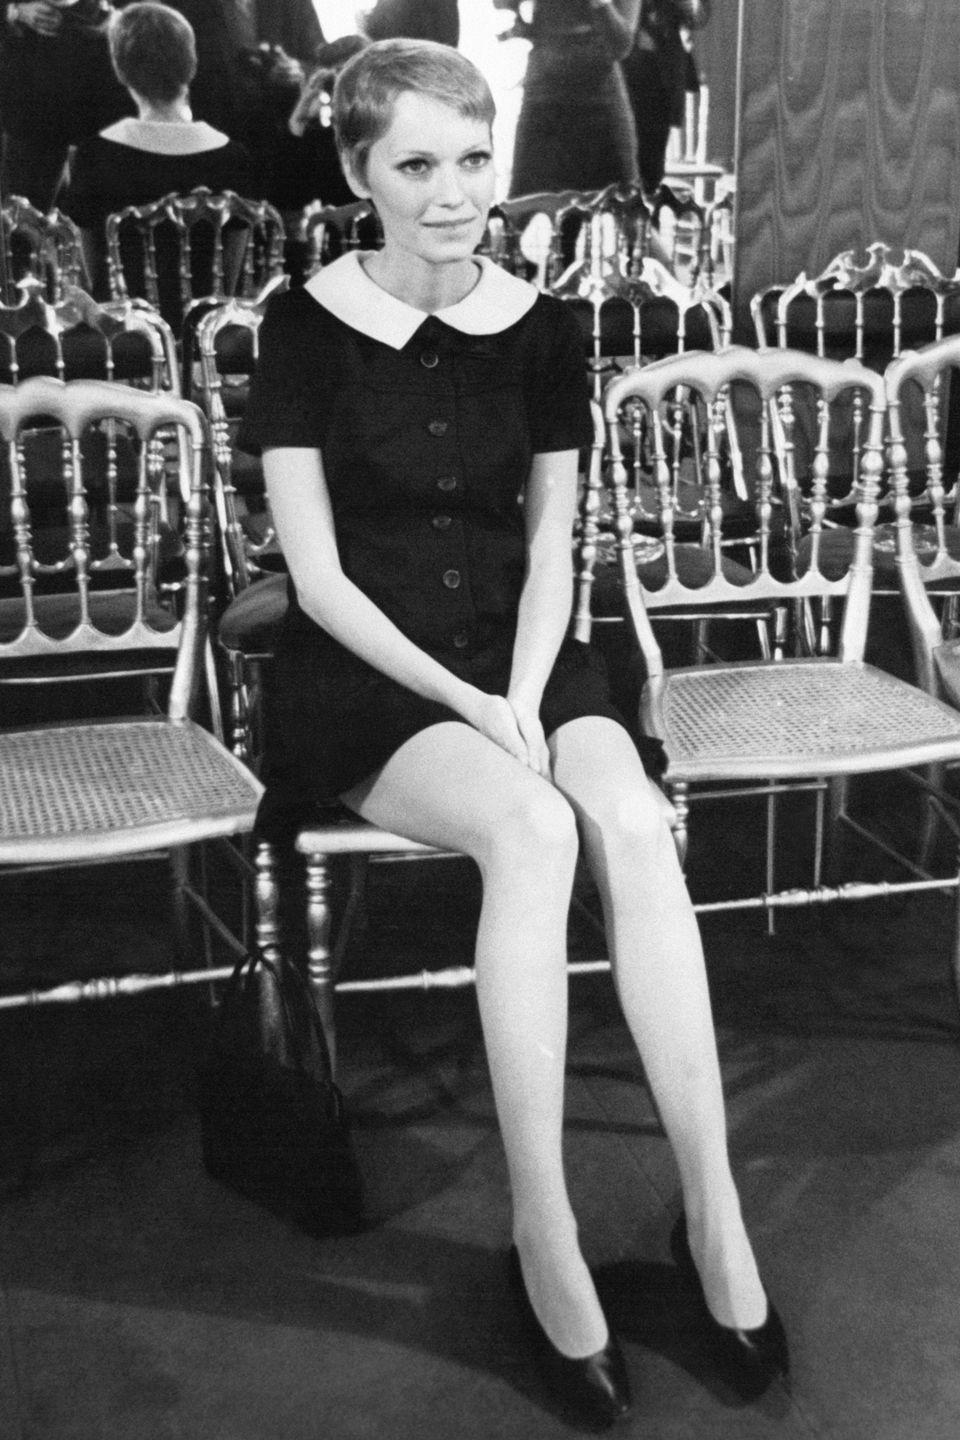 1967: At Fashion Week